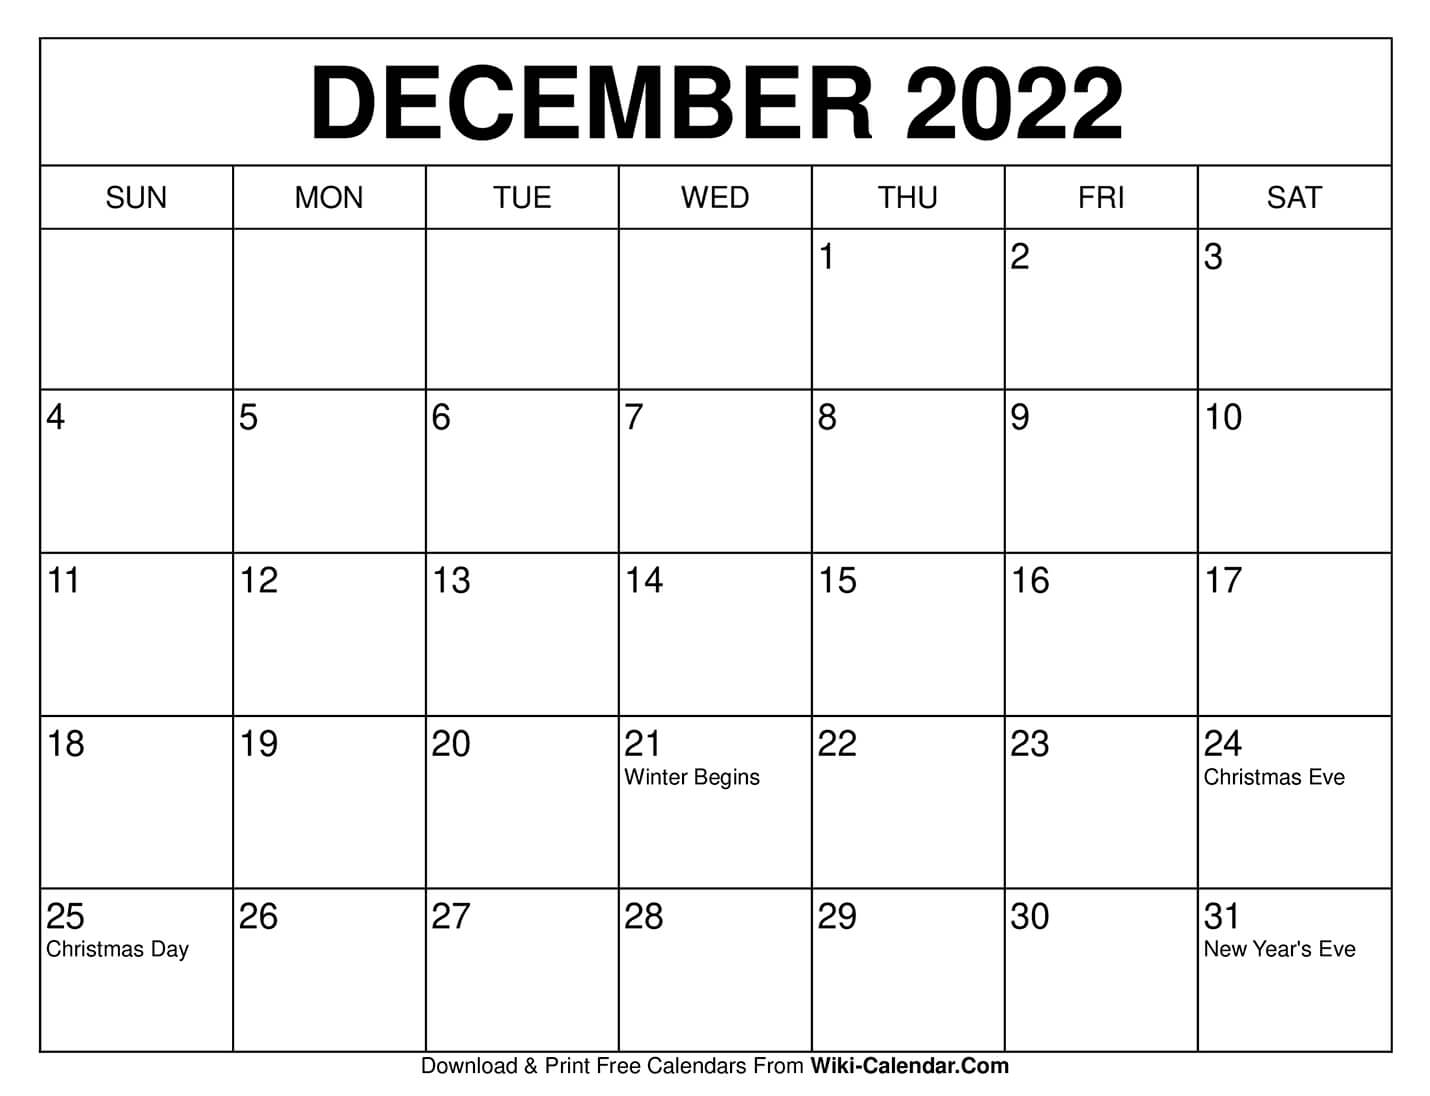 Free Printable December 2022 Calendar Templates With Holidays Wiki Calendar